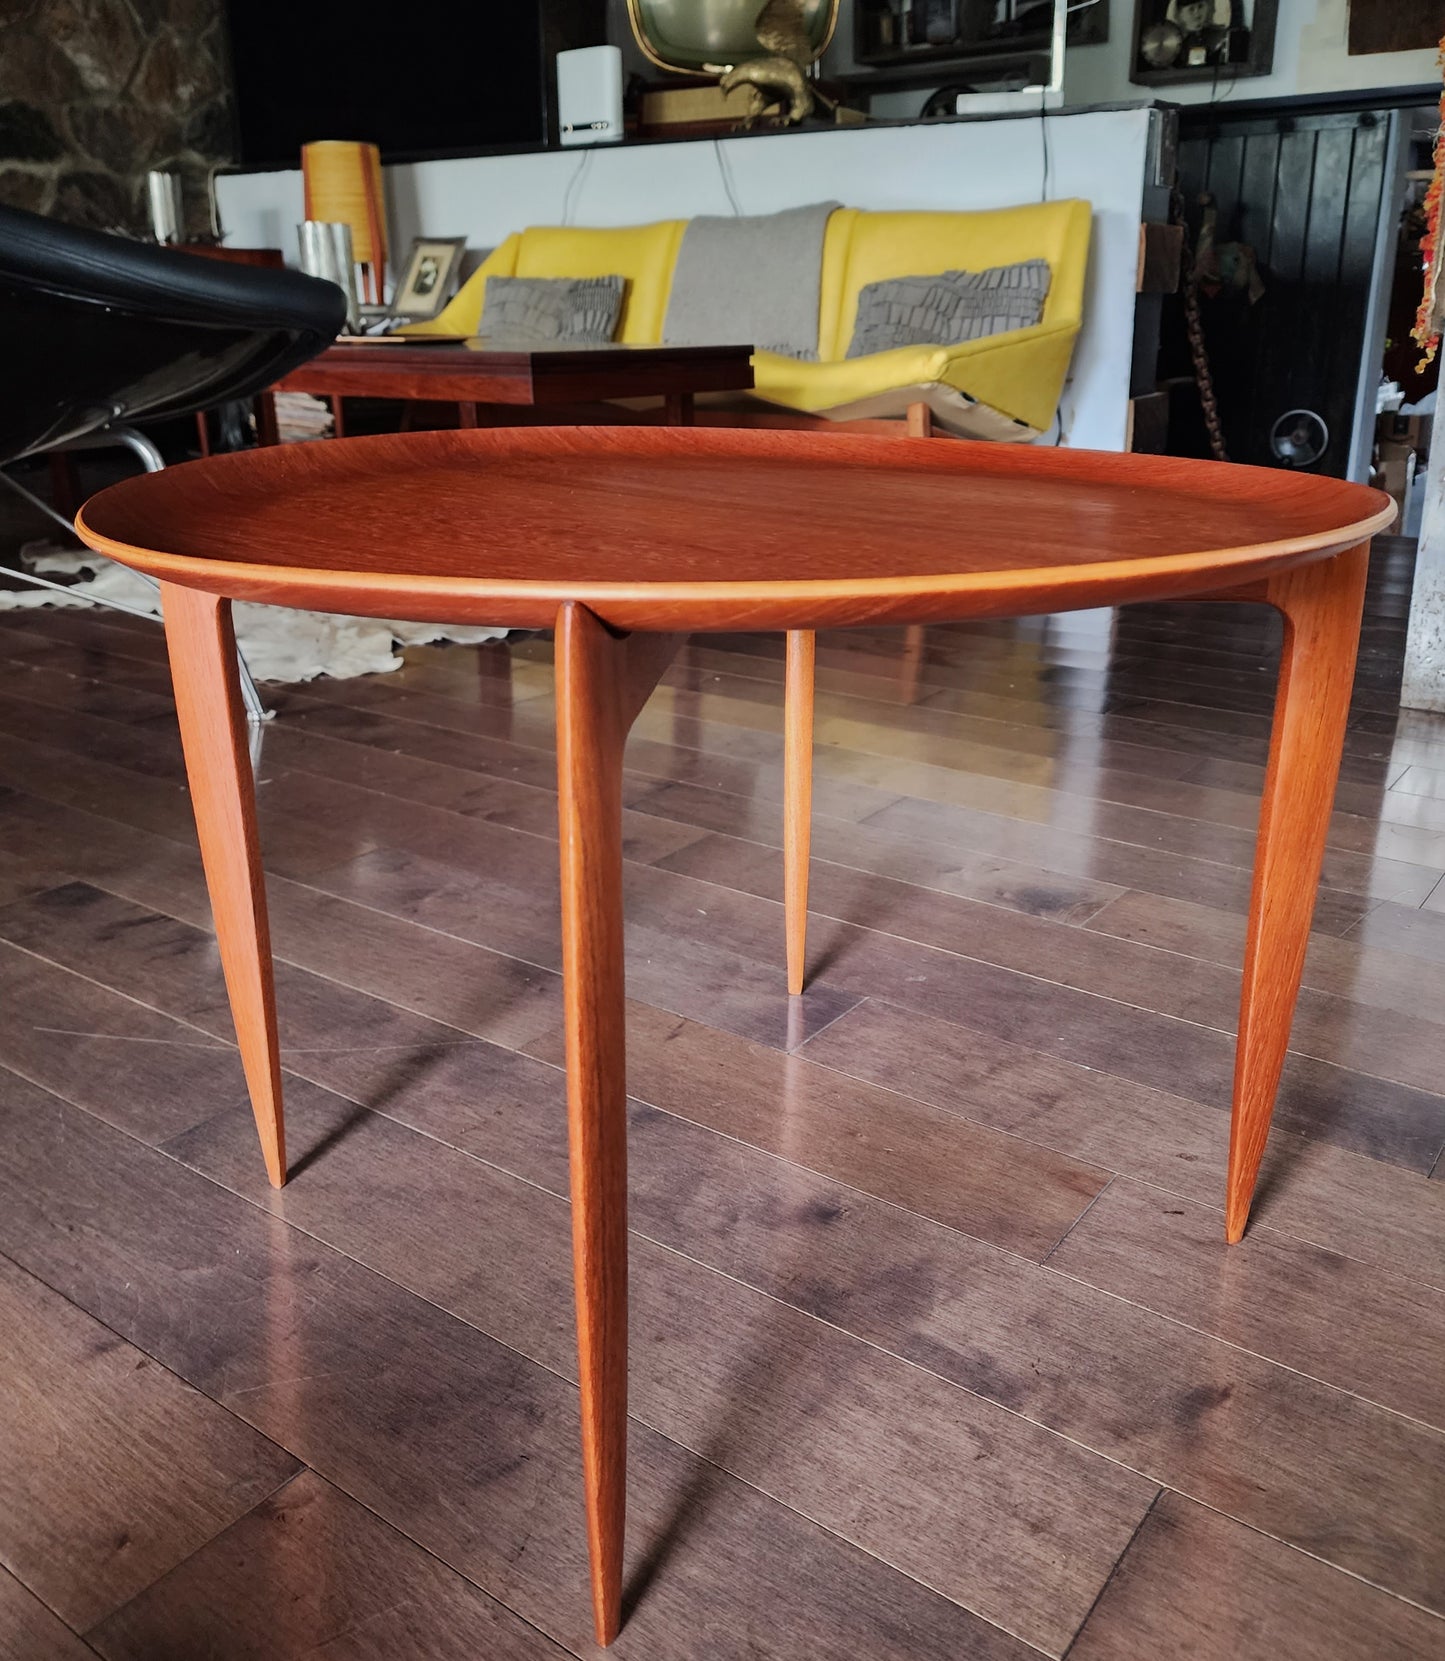 REFINISHED Danish Modern Teak Tray Table by Willumsen & Engholm for Fritz Hansen, Model 4508